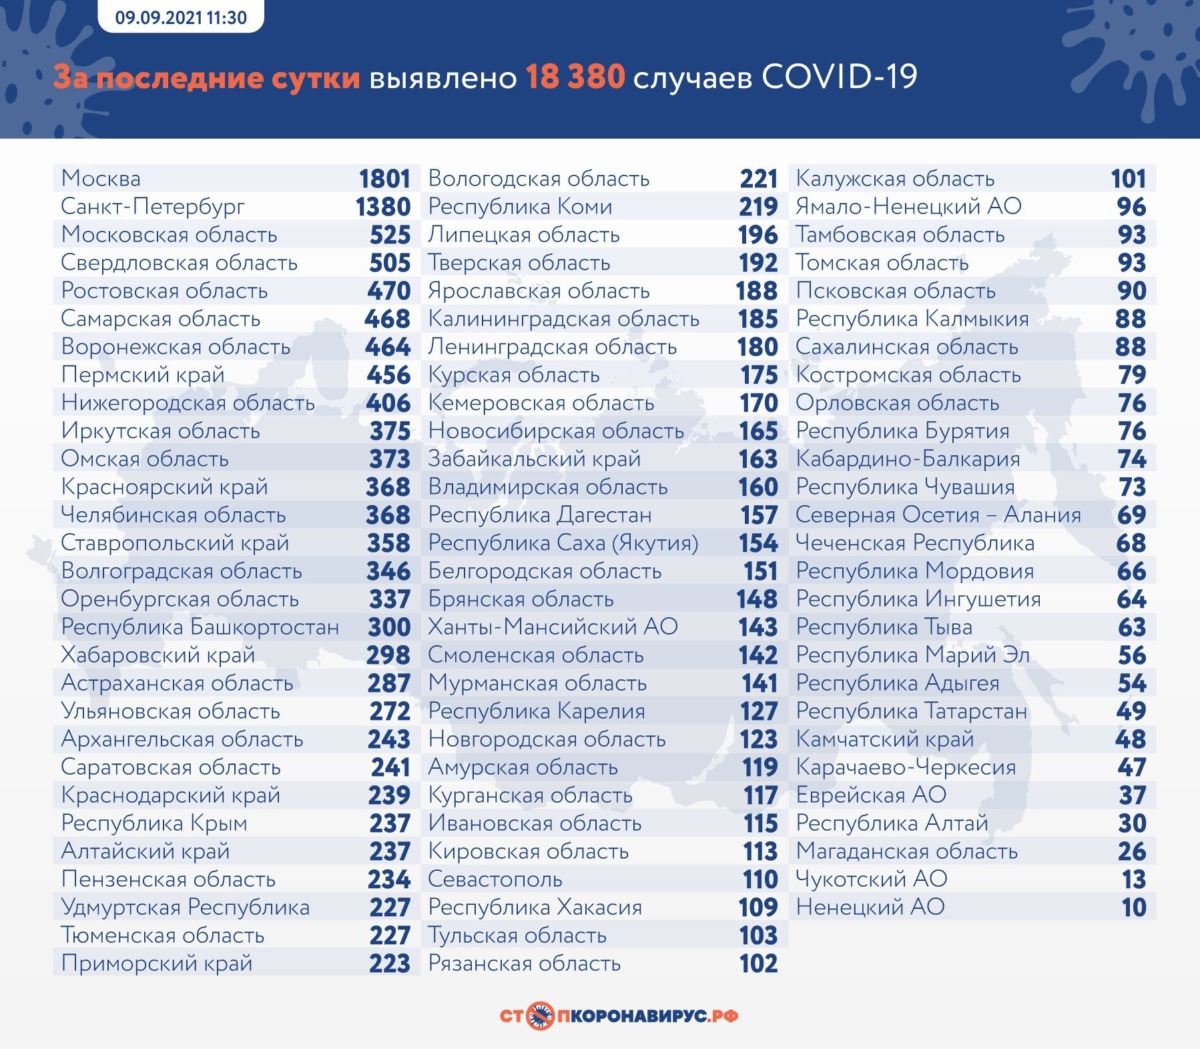 Статистика коронавируса в России на 9 сентября